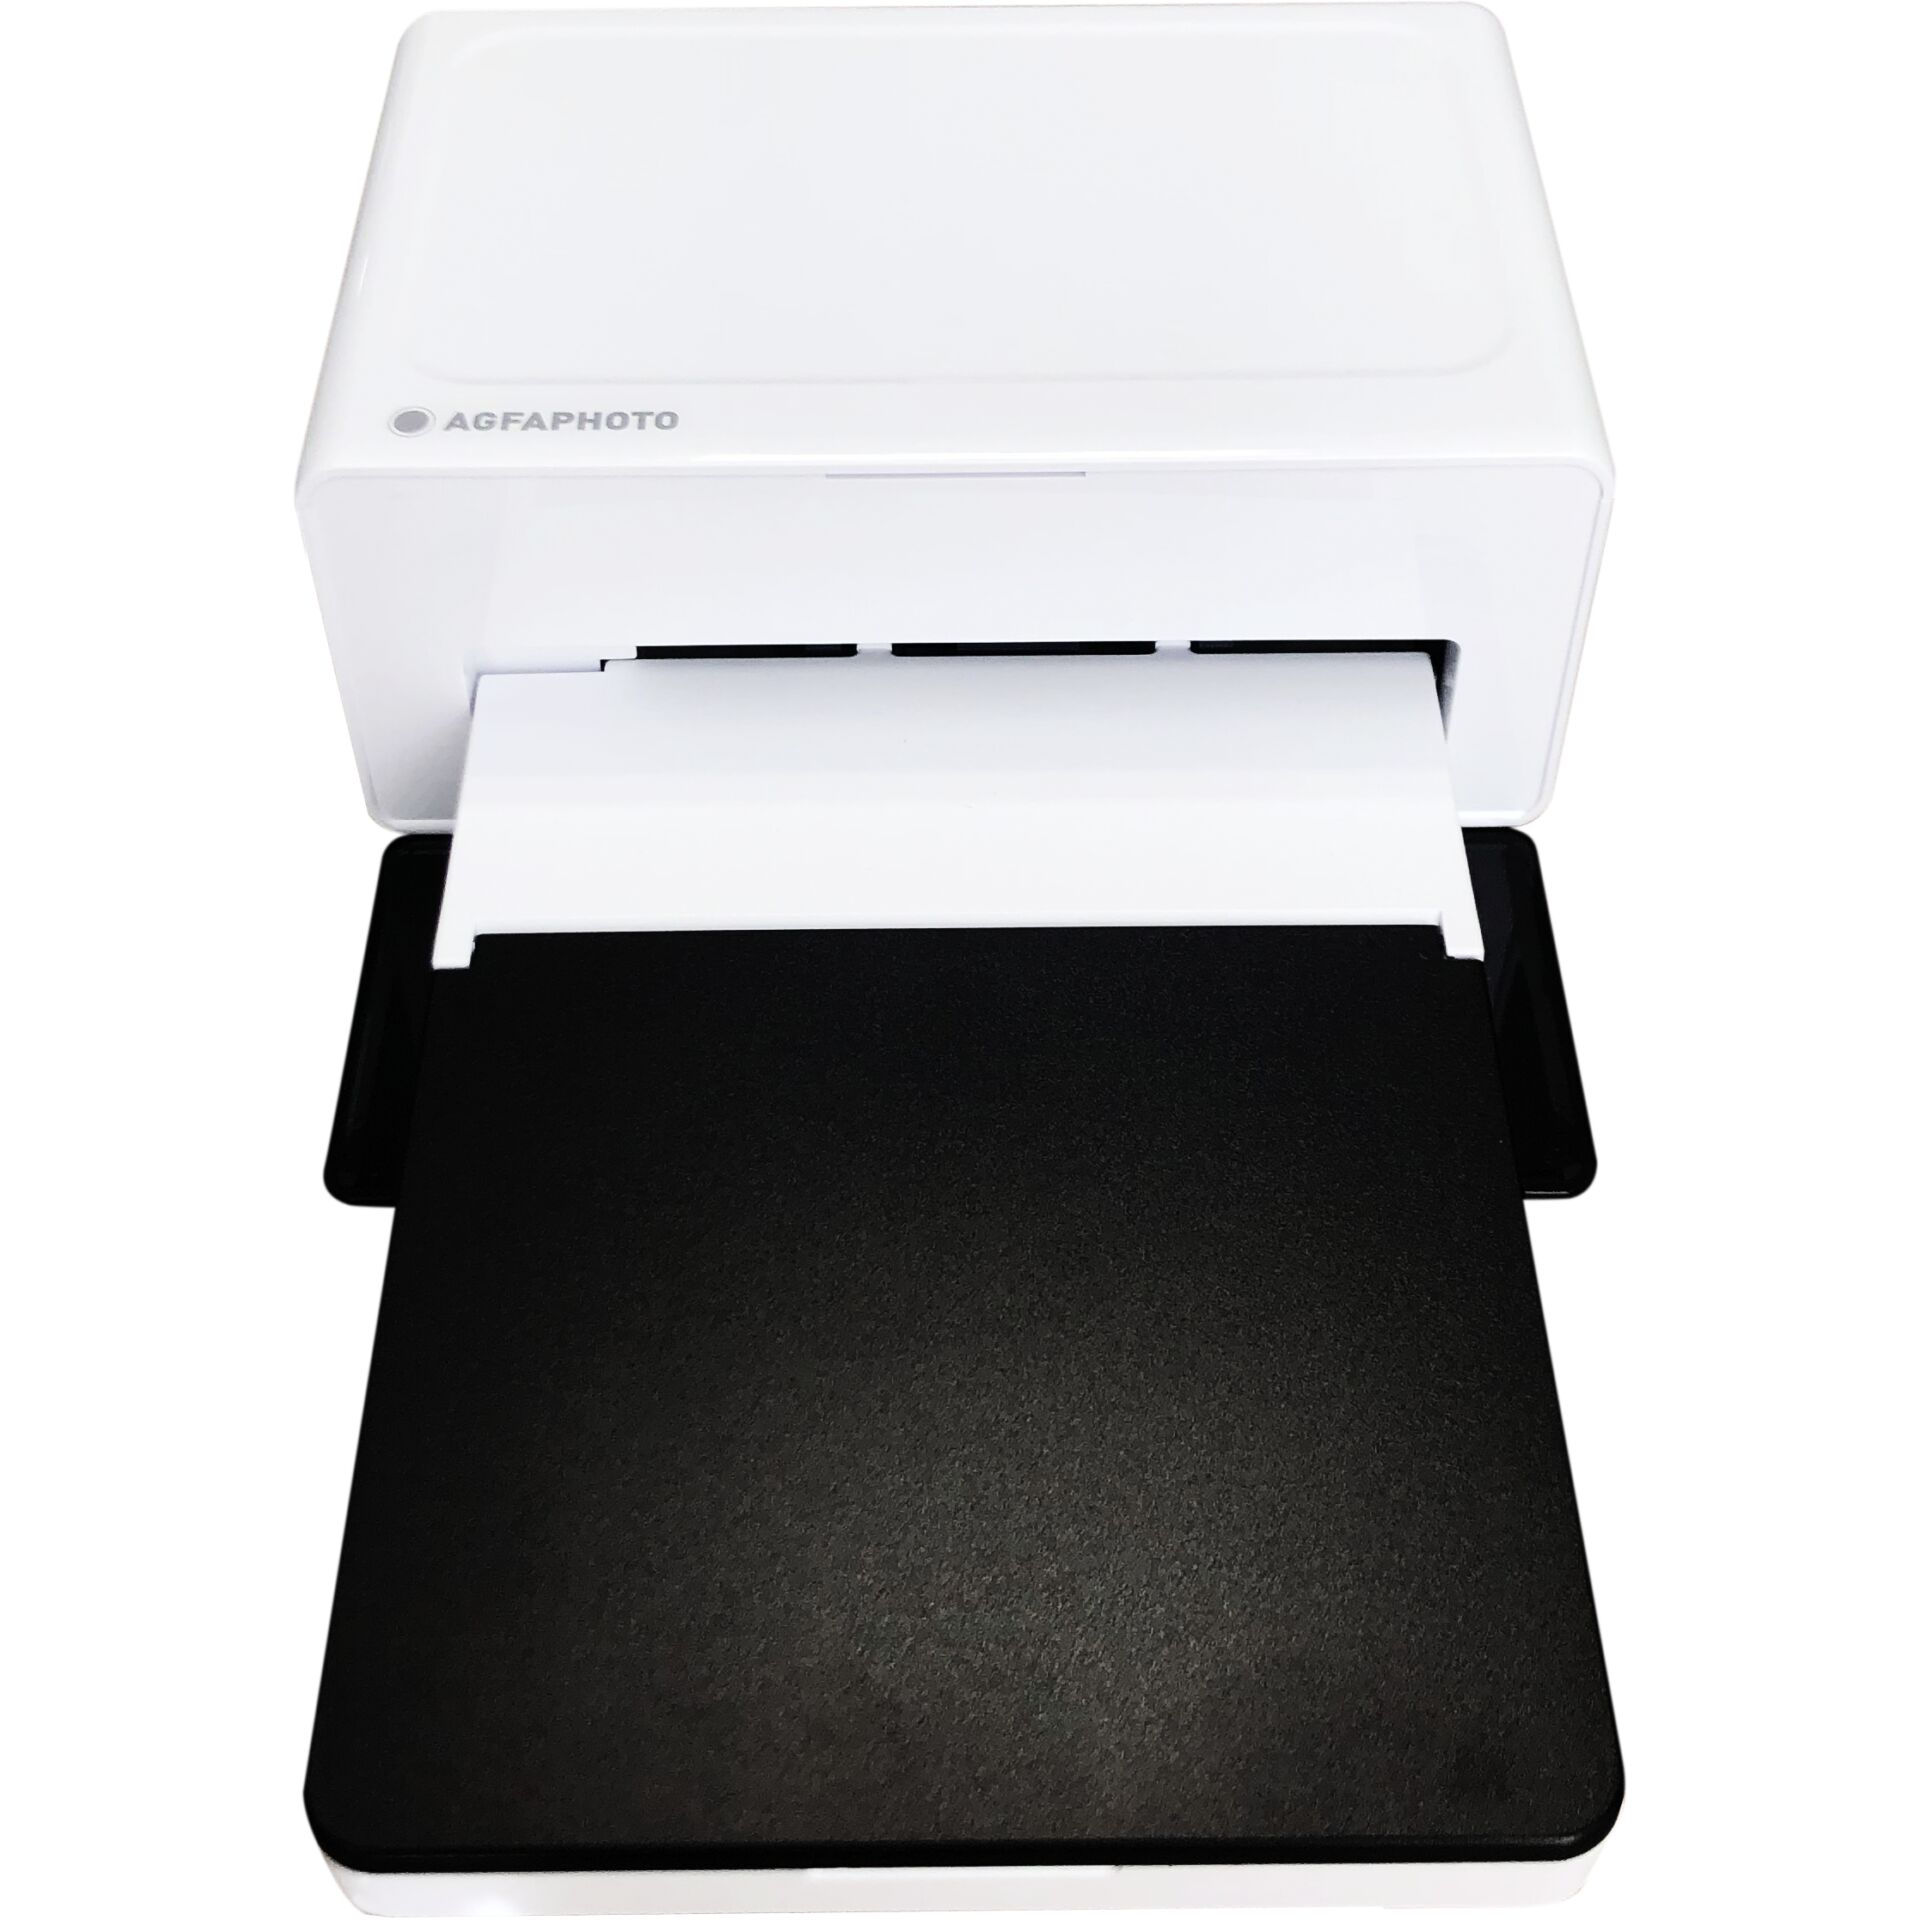 DNP Imprimante QW410 + 1 carton papier 10x15 SD